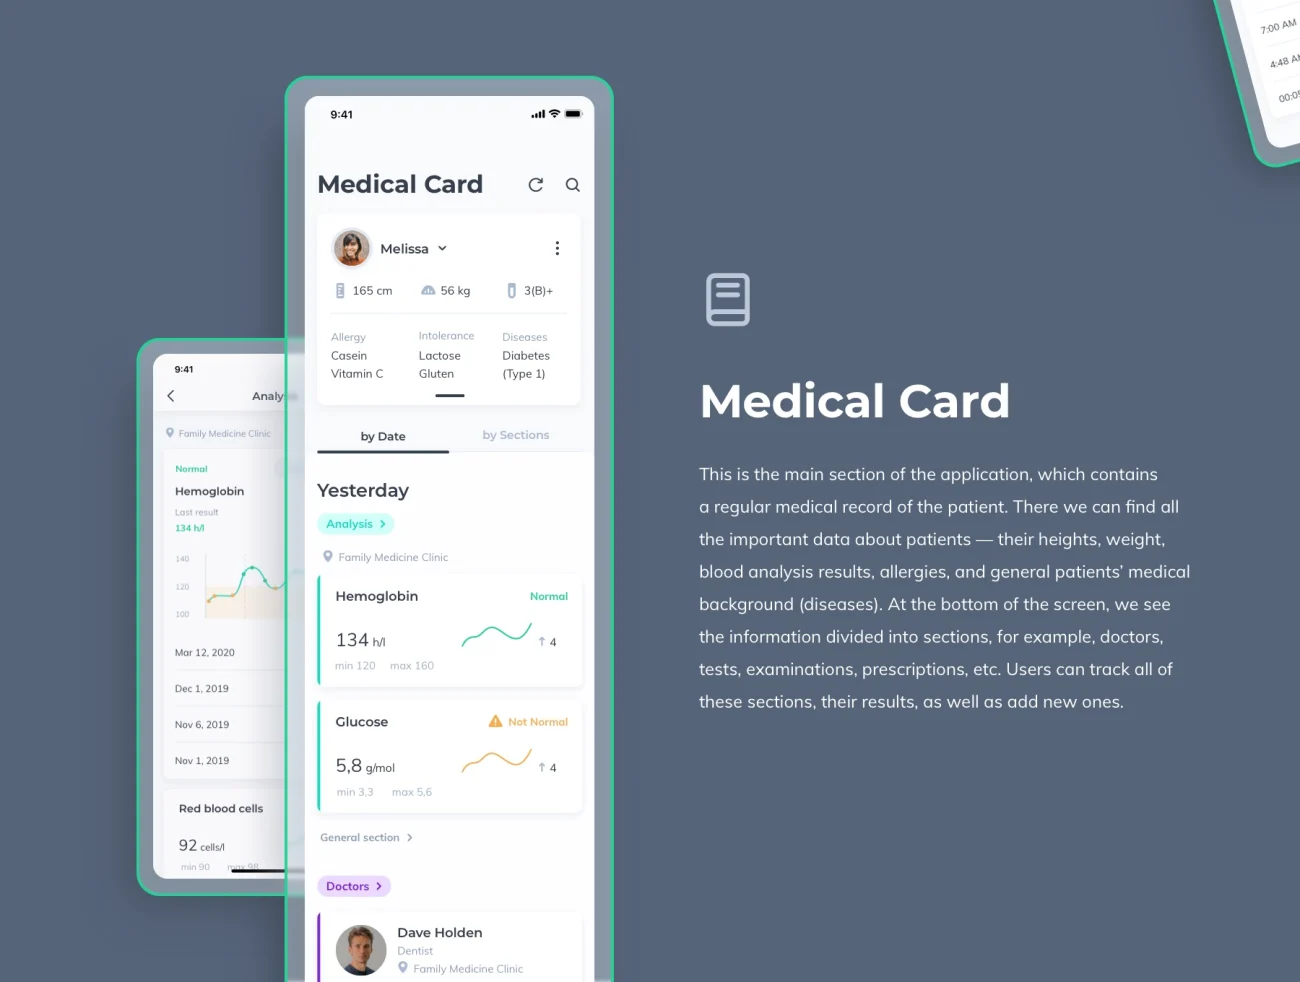 Medical App UI kit for iOS 医疗应用程序UI套件-UI/UX-到位啦UI